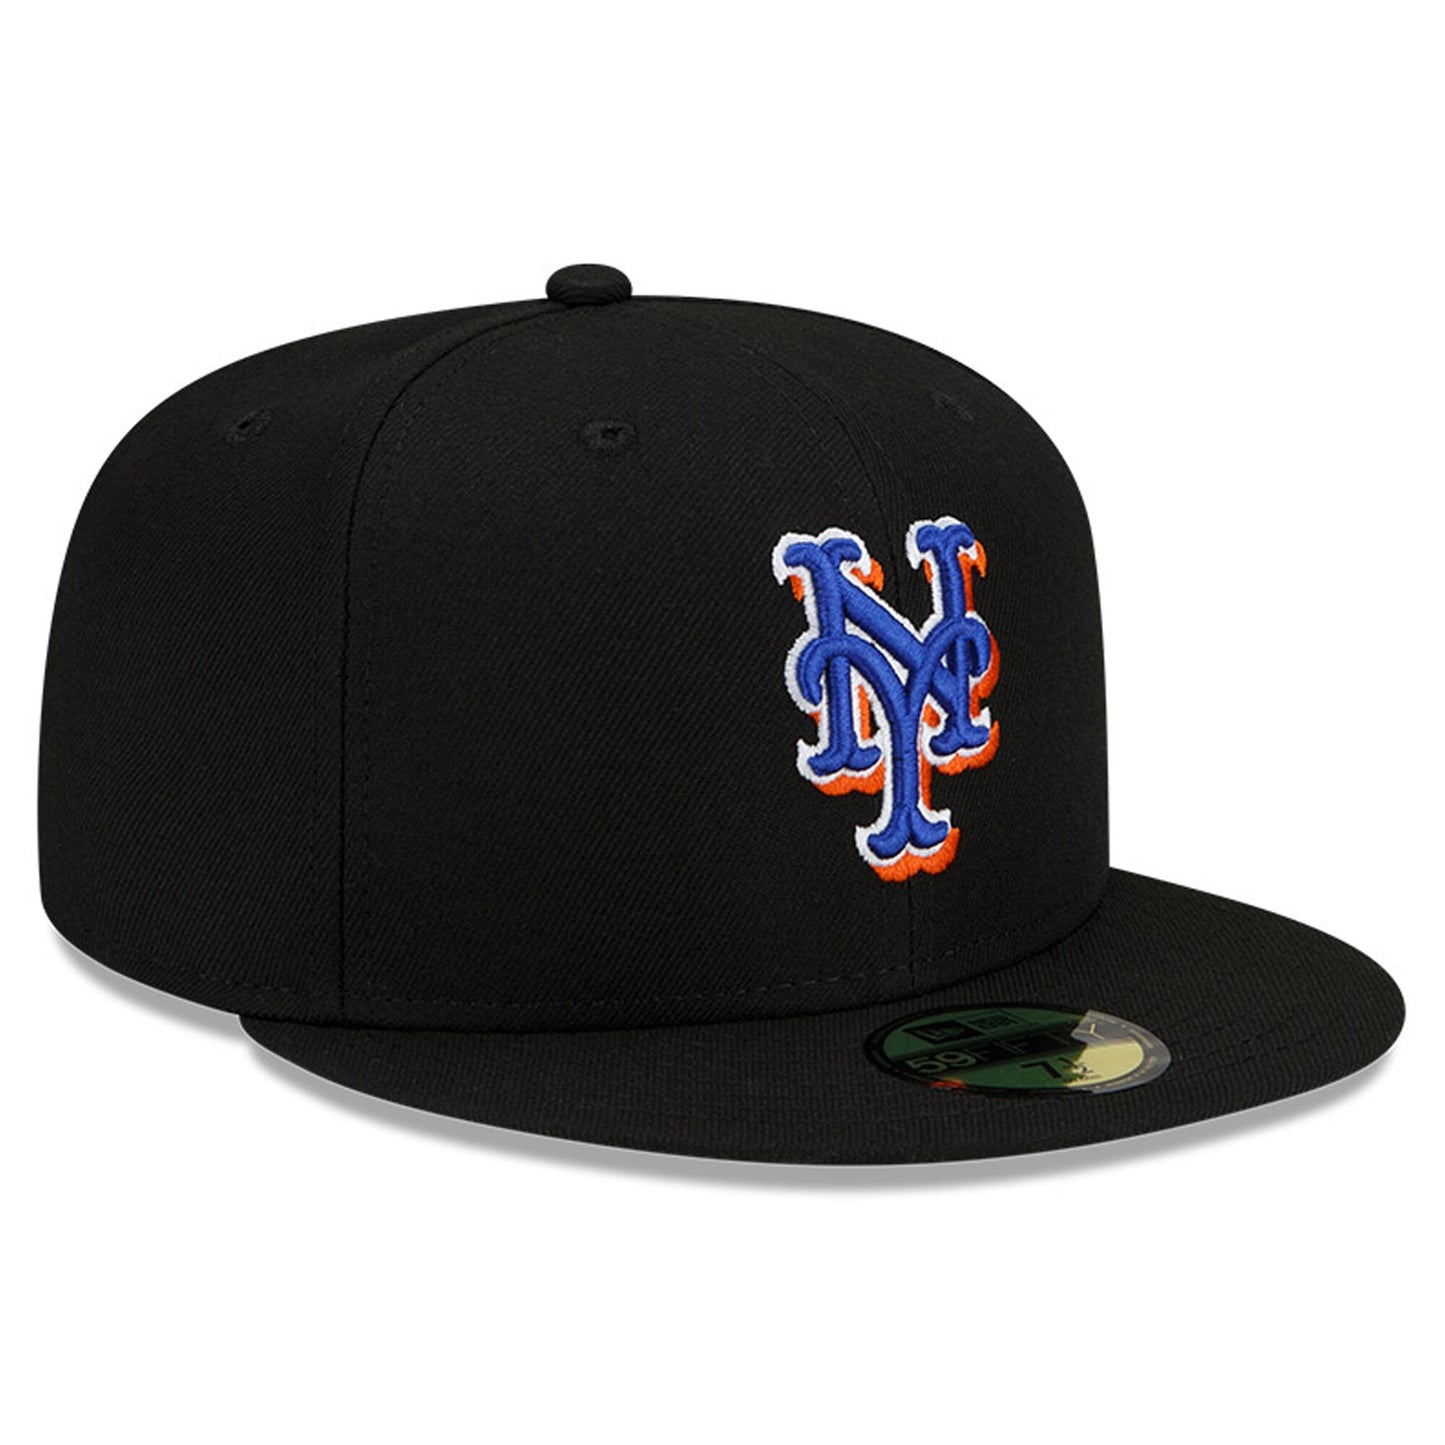 New Era 59FIFTY New York Mets